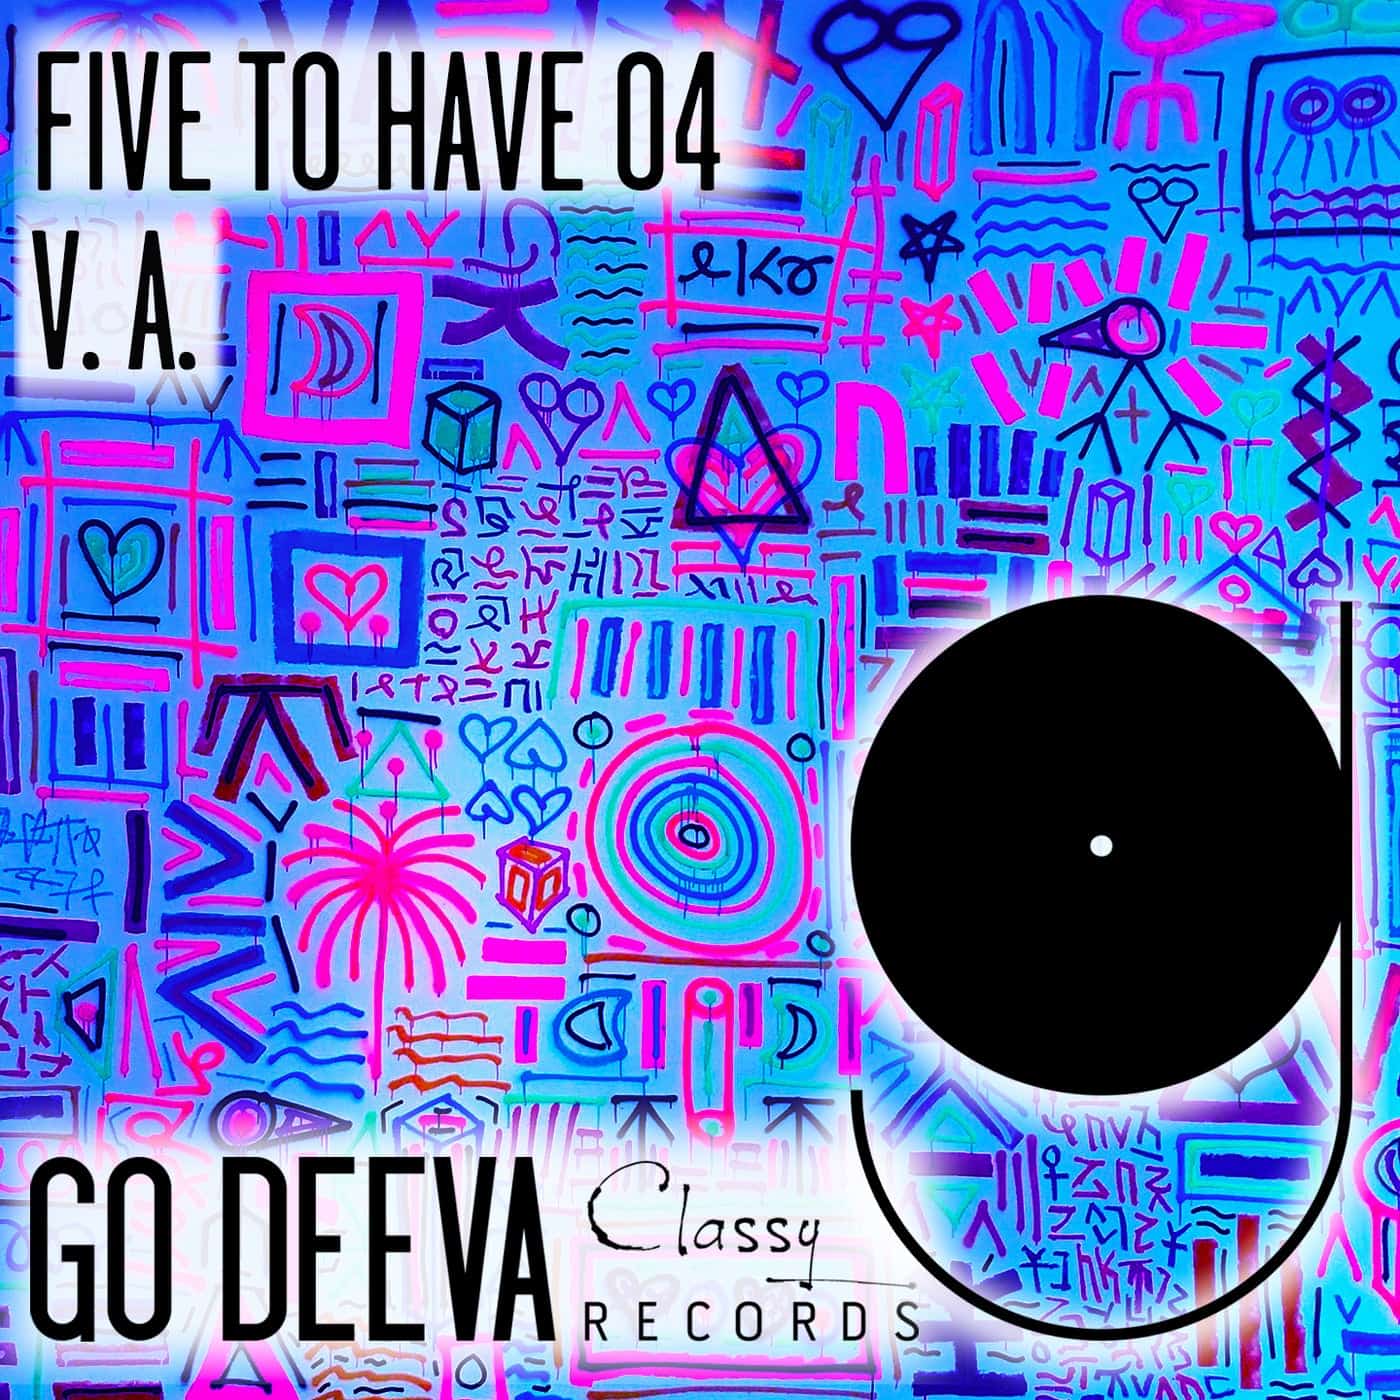 image cover: Obataiye, Anorre, REBRN, David Aurel, Tayllor, Band&dos - FIVE TO HAVE 04 / GDC116